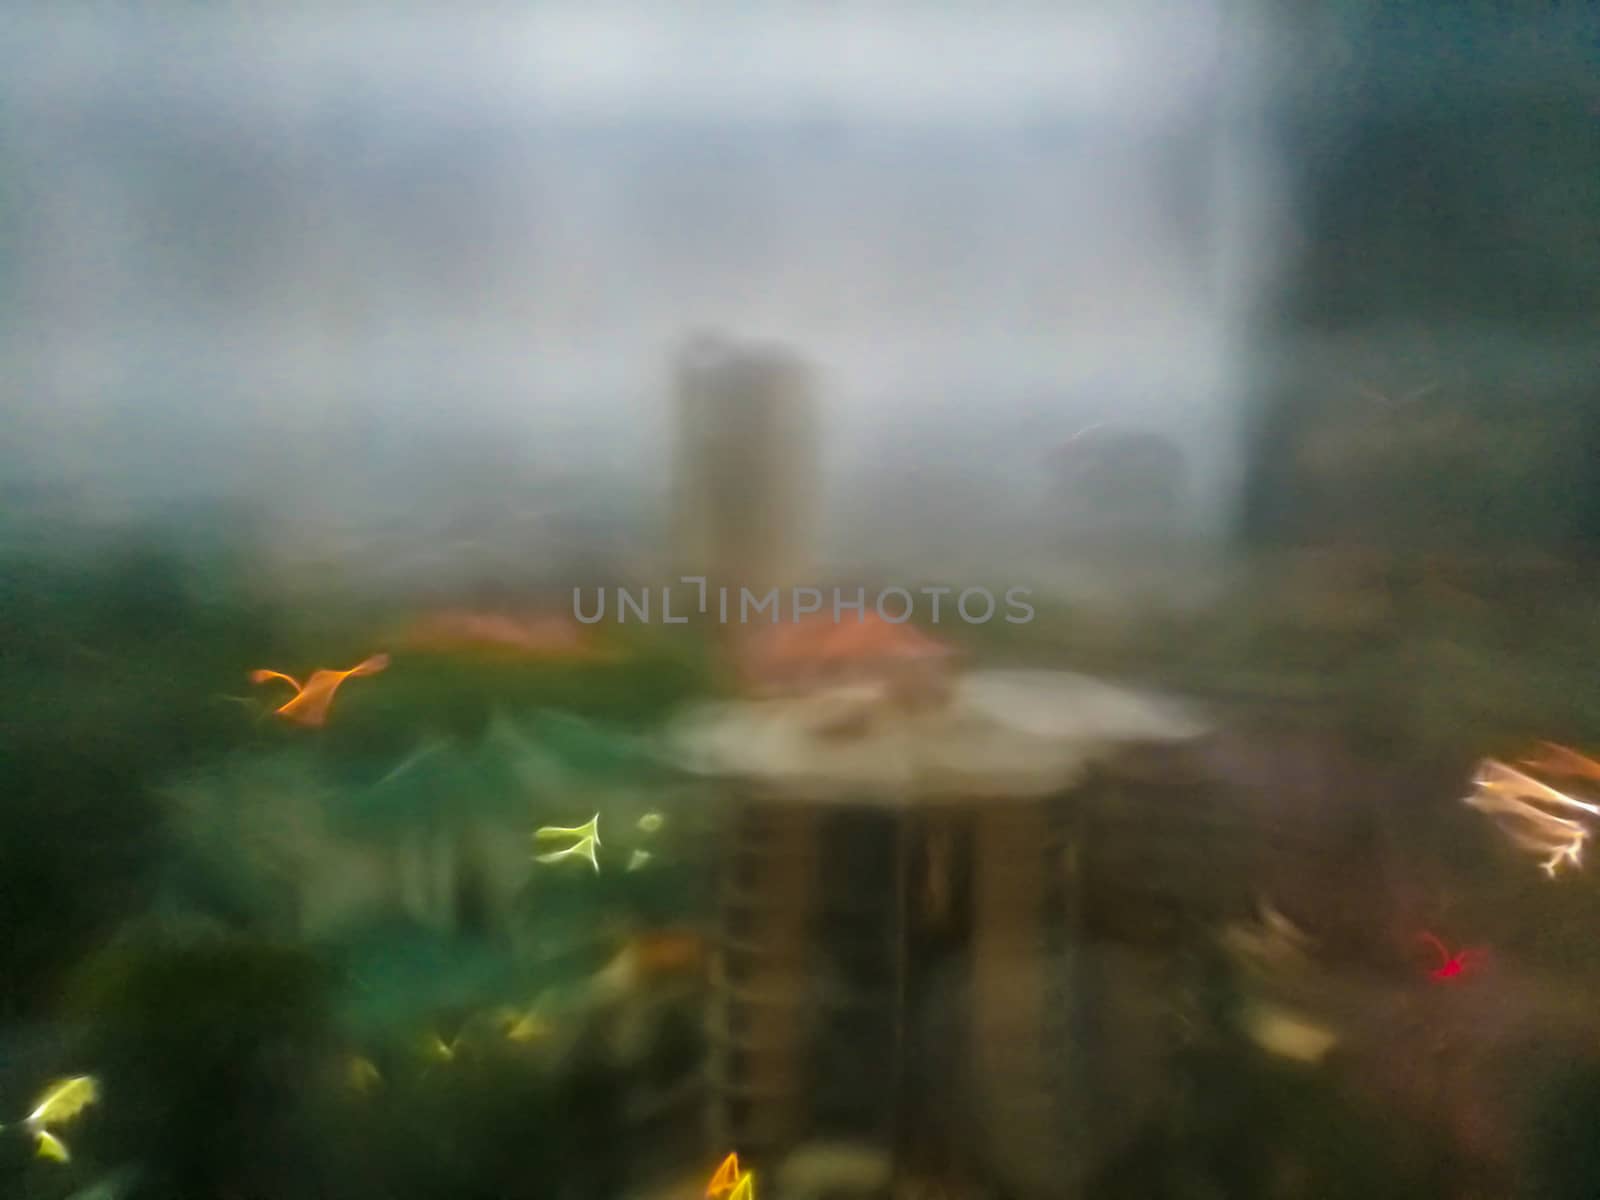 Defocused abstract scene of window outlook in rainy day evening by eyeofpaul